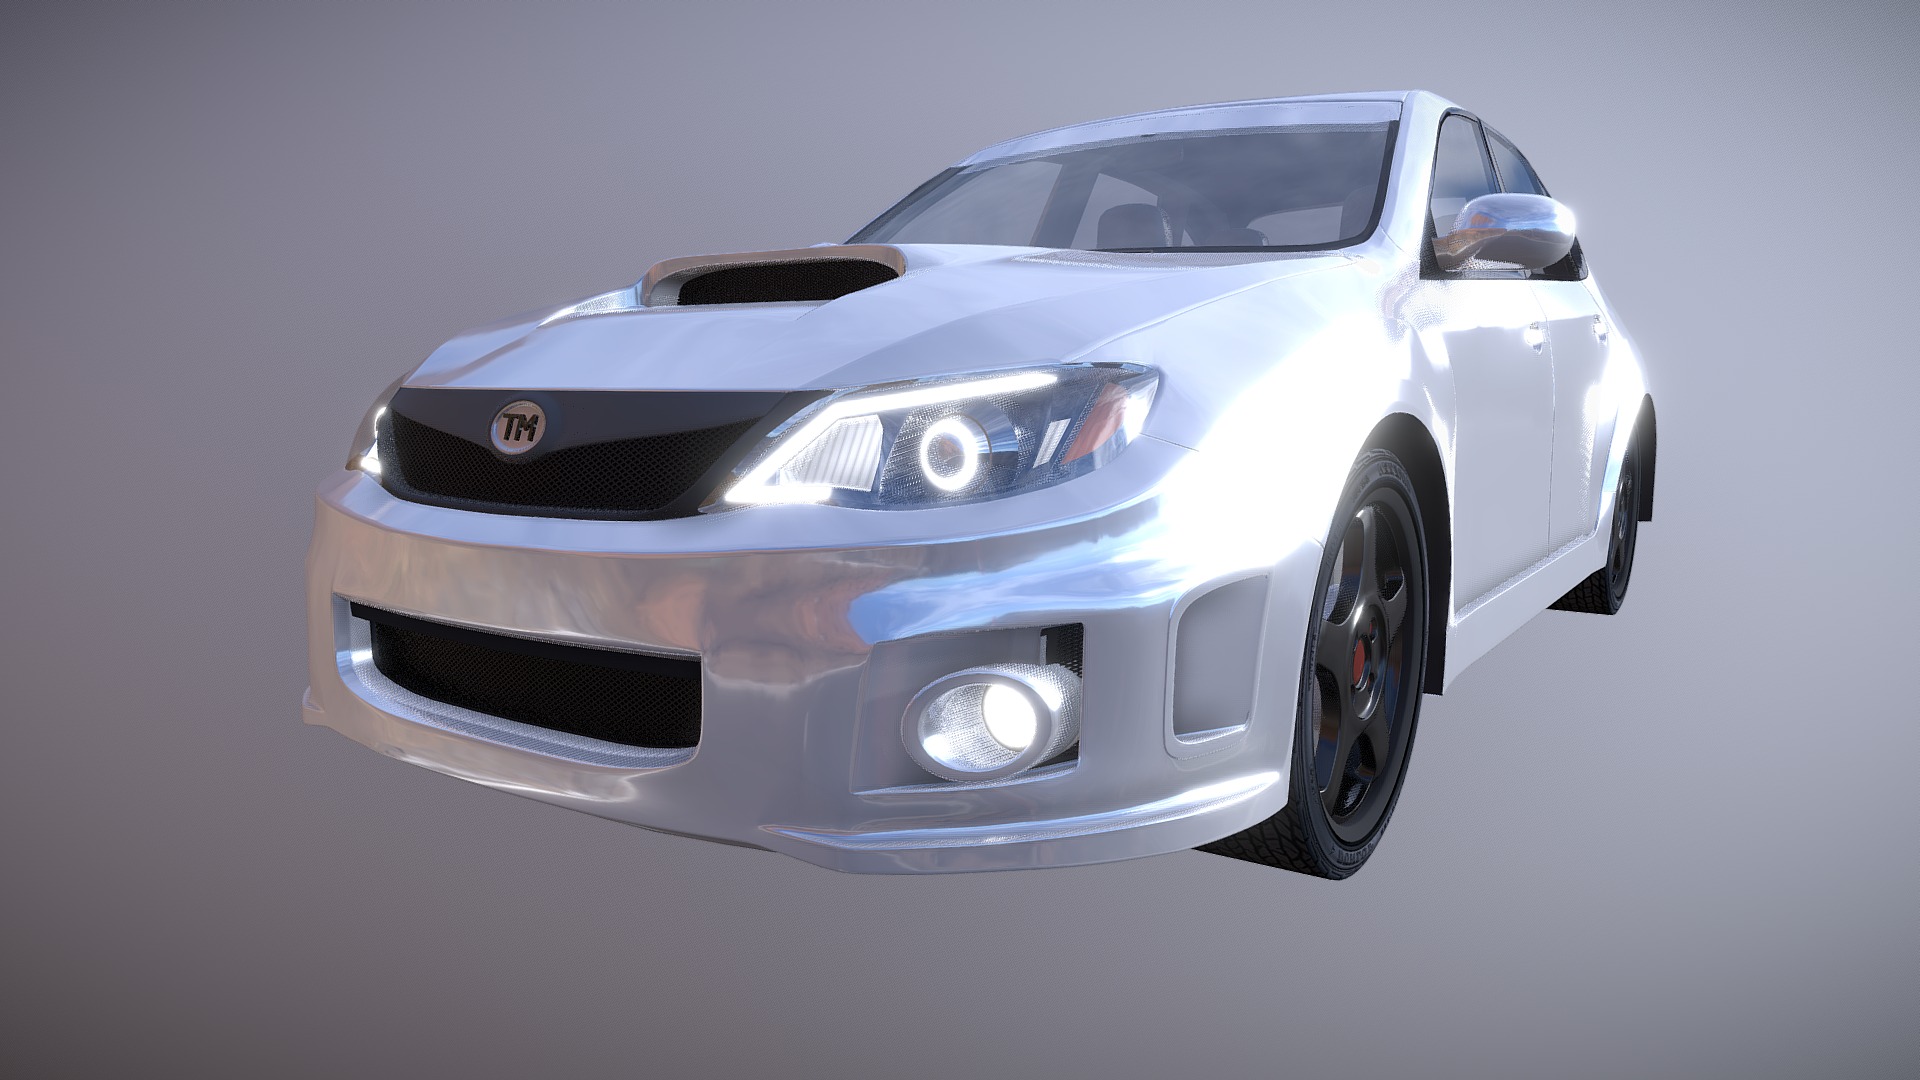 3D model TM’s Hatchback - This is a 3D model of the TM's Hatchback. The 3D model is about a white sports car.